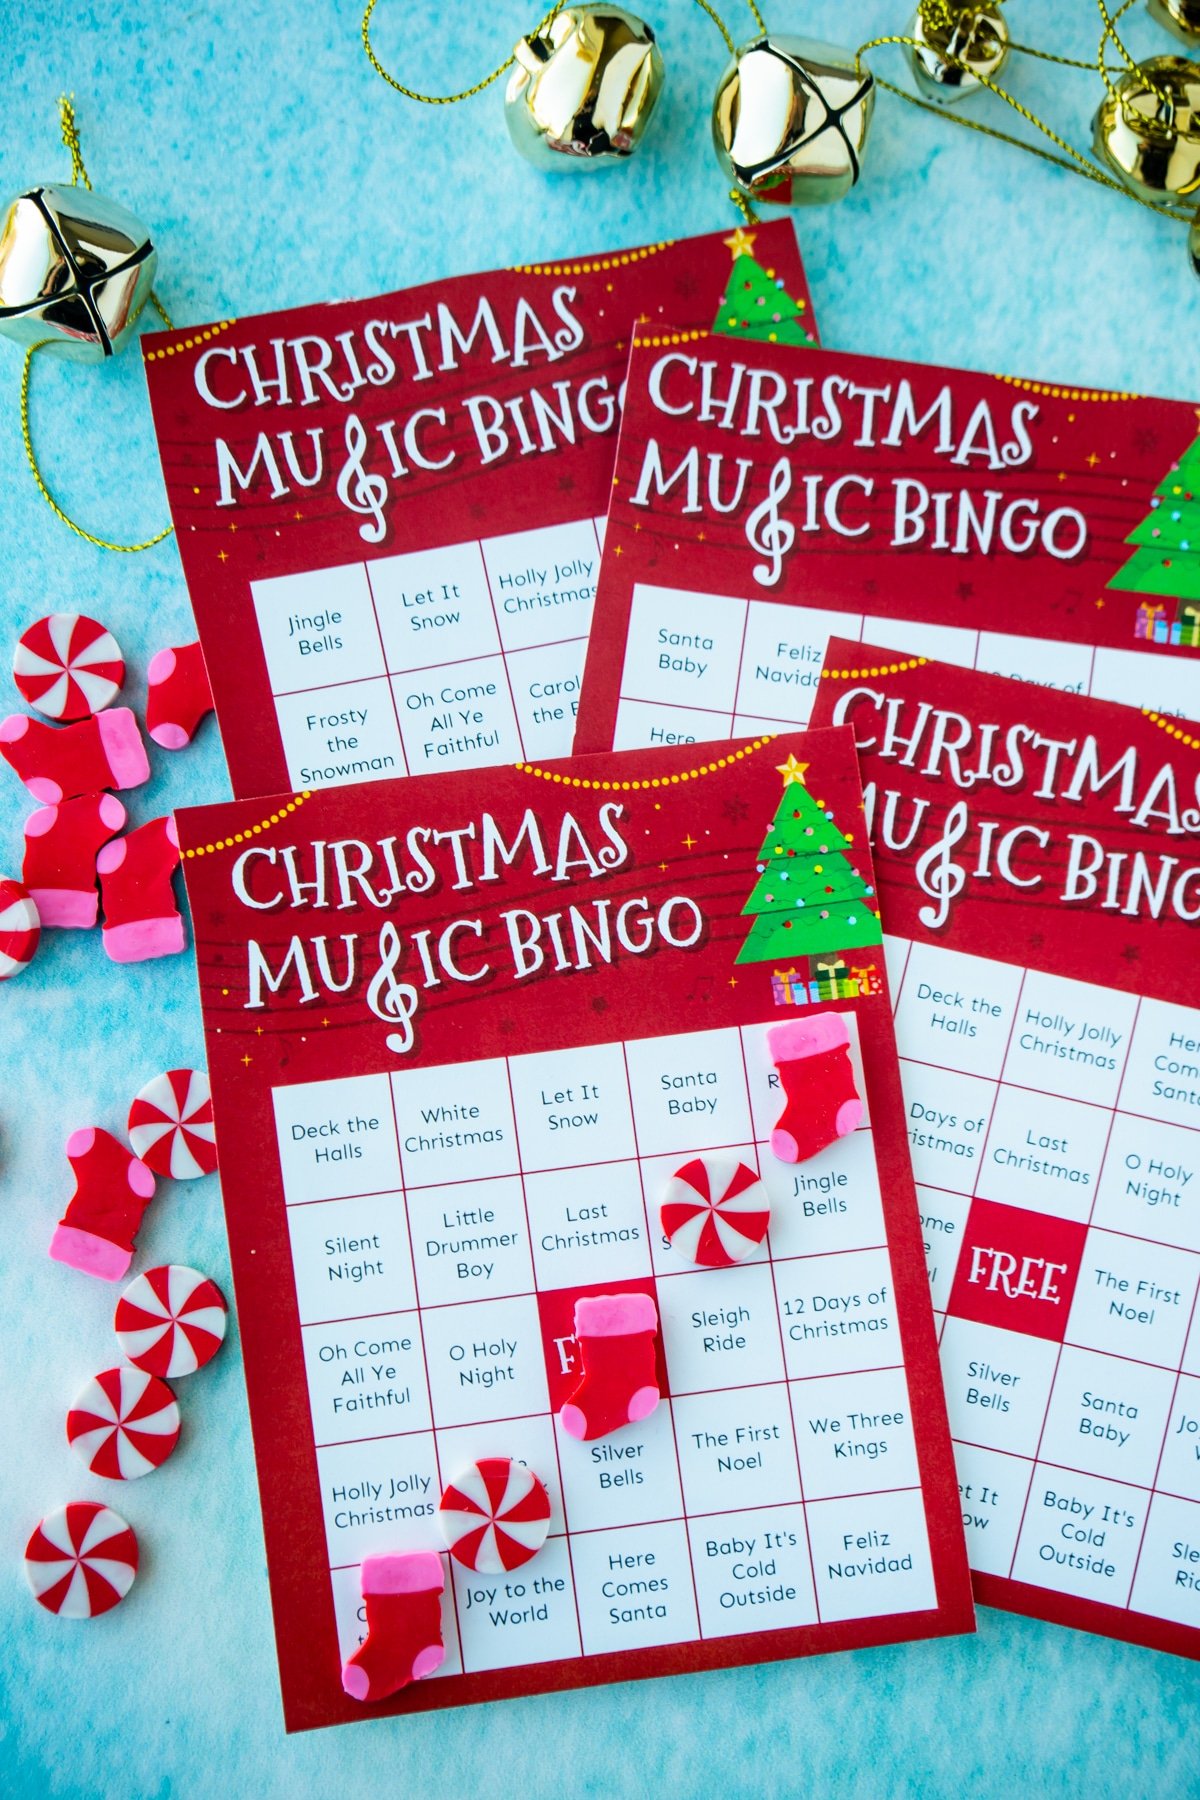 Four Christmas music bingo cards on a blue background